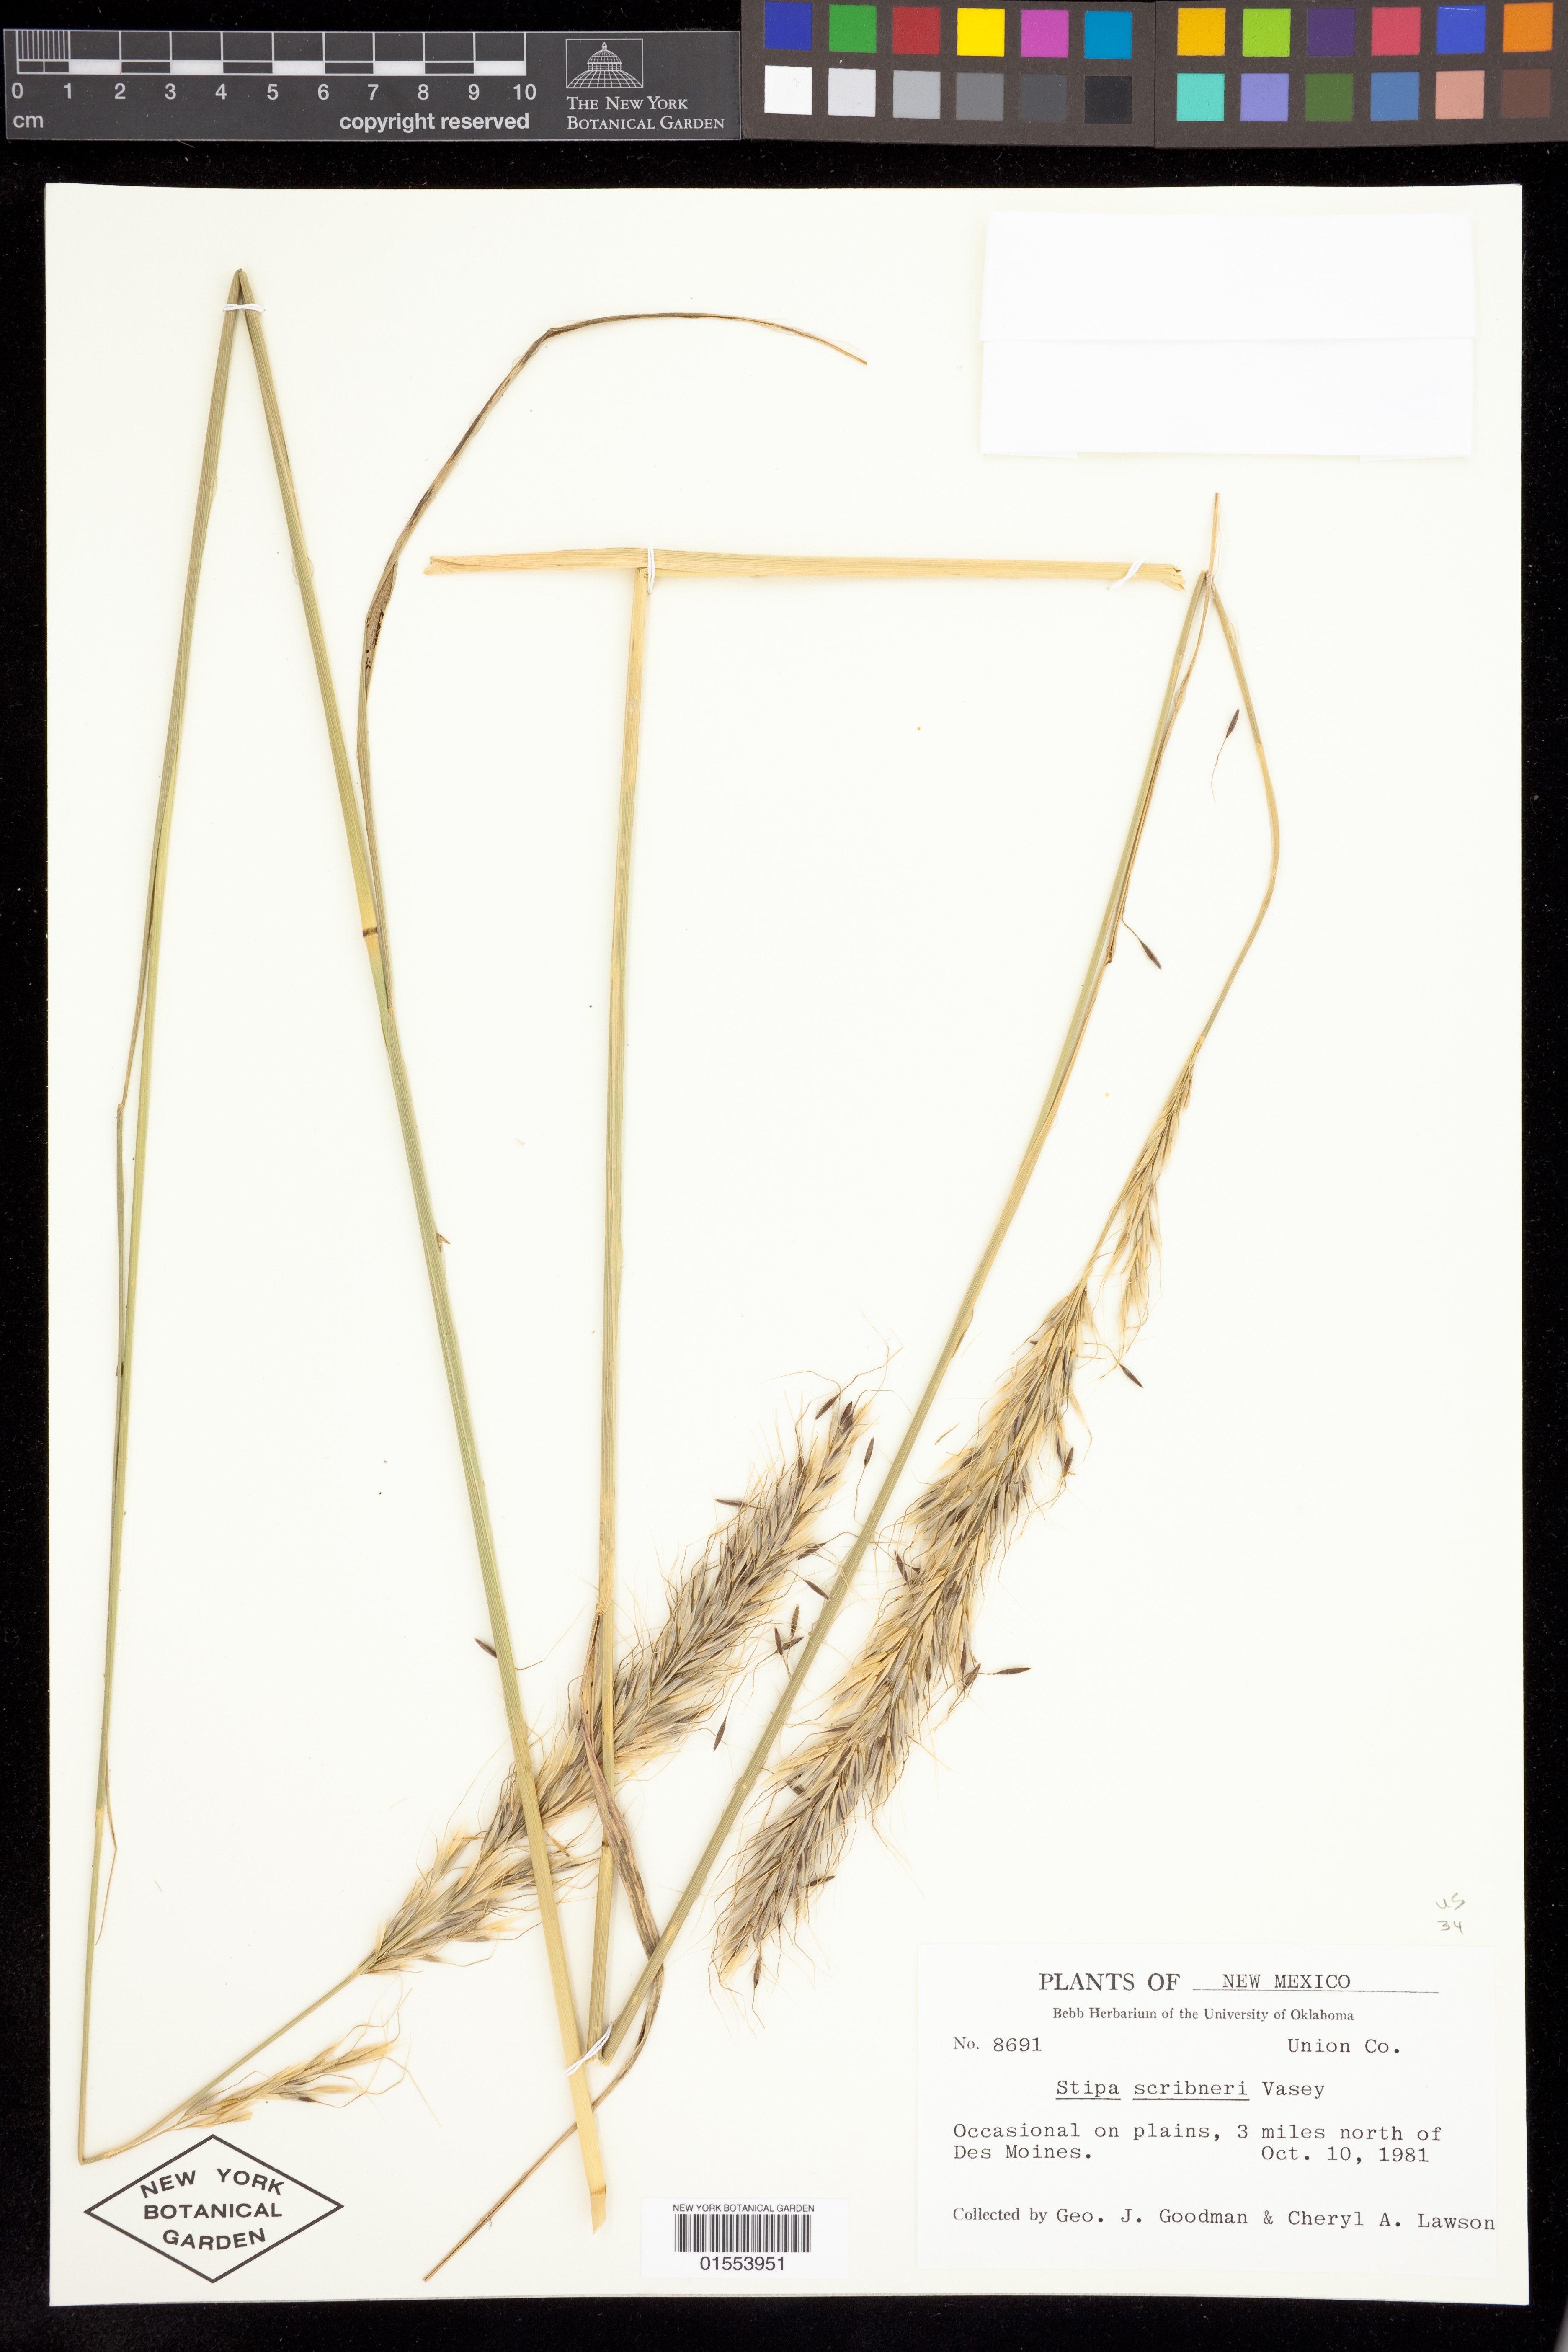 Herbarium image of grass stem and seedhead